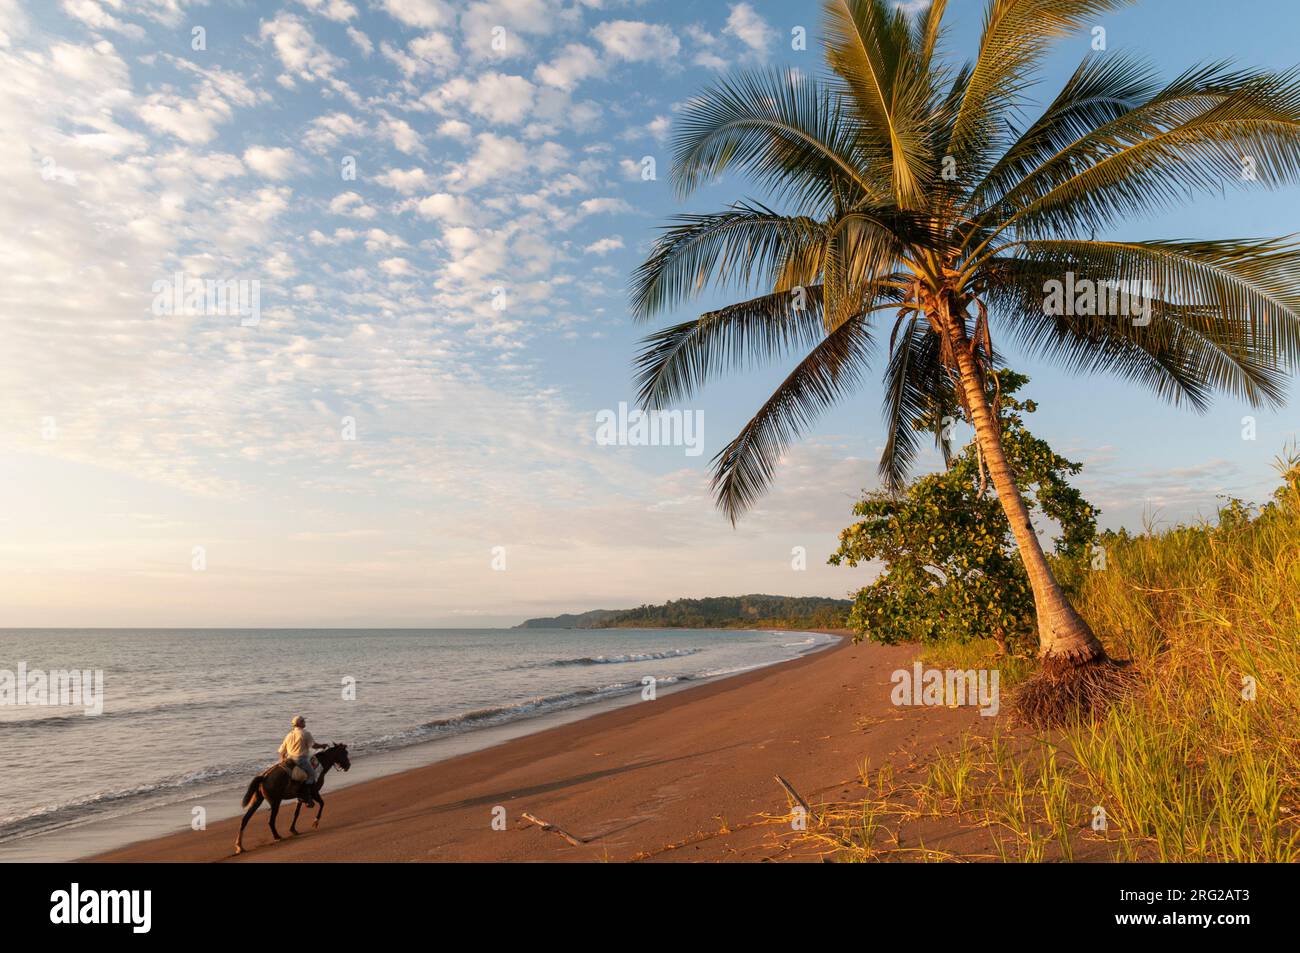 A person riding a horse past a palm tree on a sandy beach. Drake Bay, Osa Peninsula, Costa Rica. Stock Photo